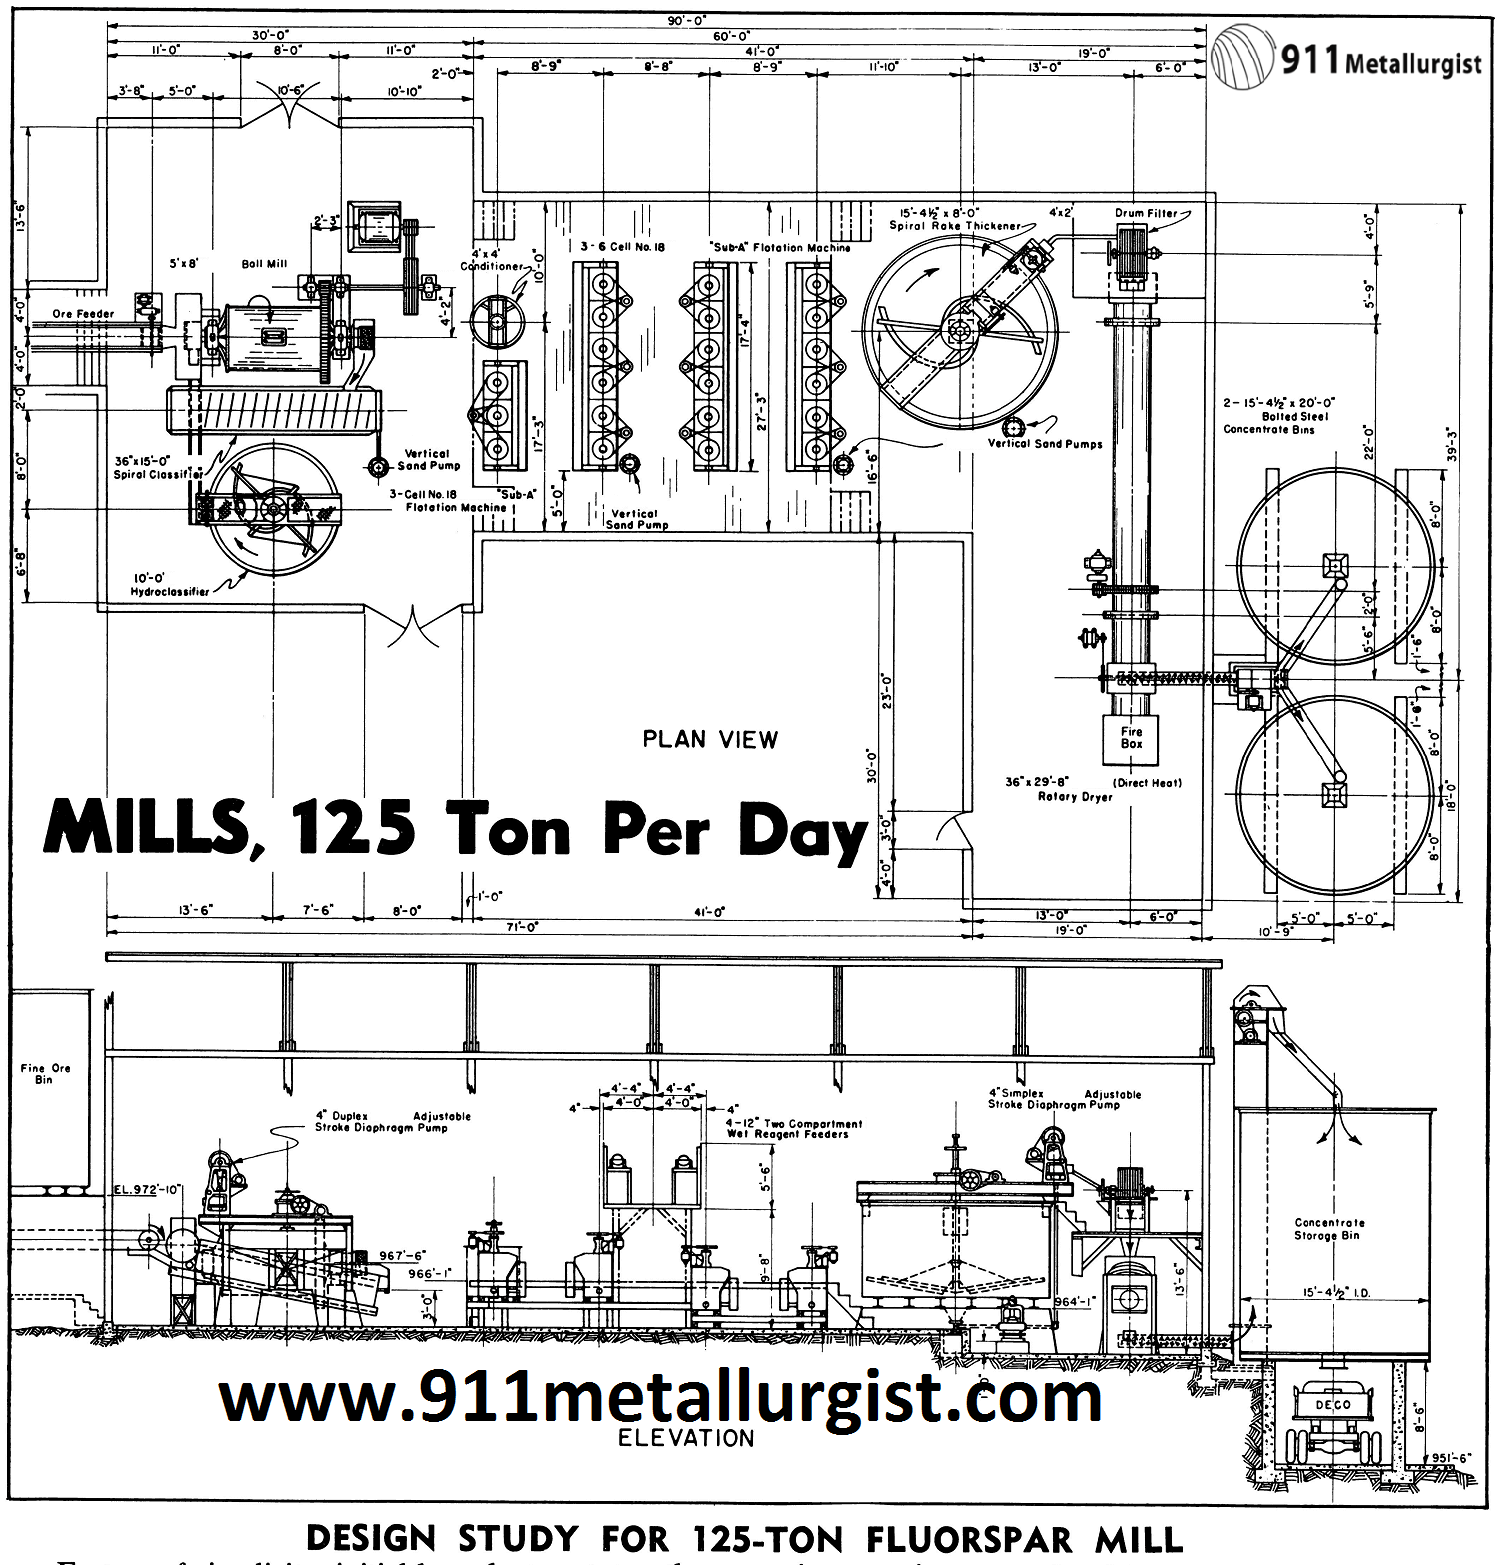 Design Study for 125-Ton Fluorspar Mill